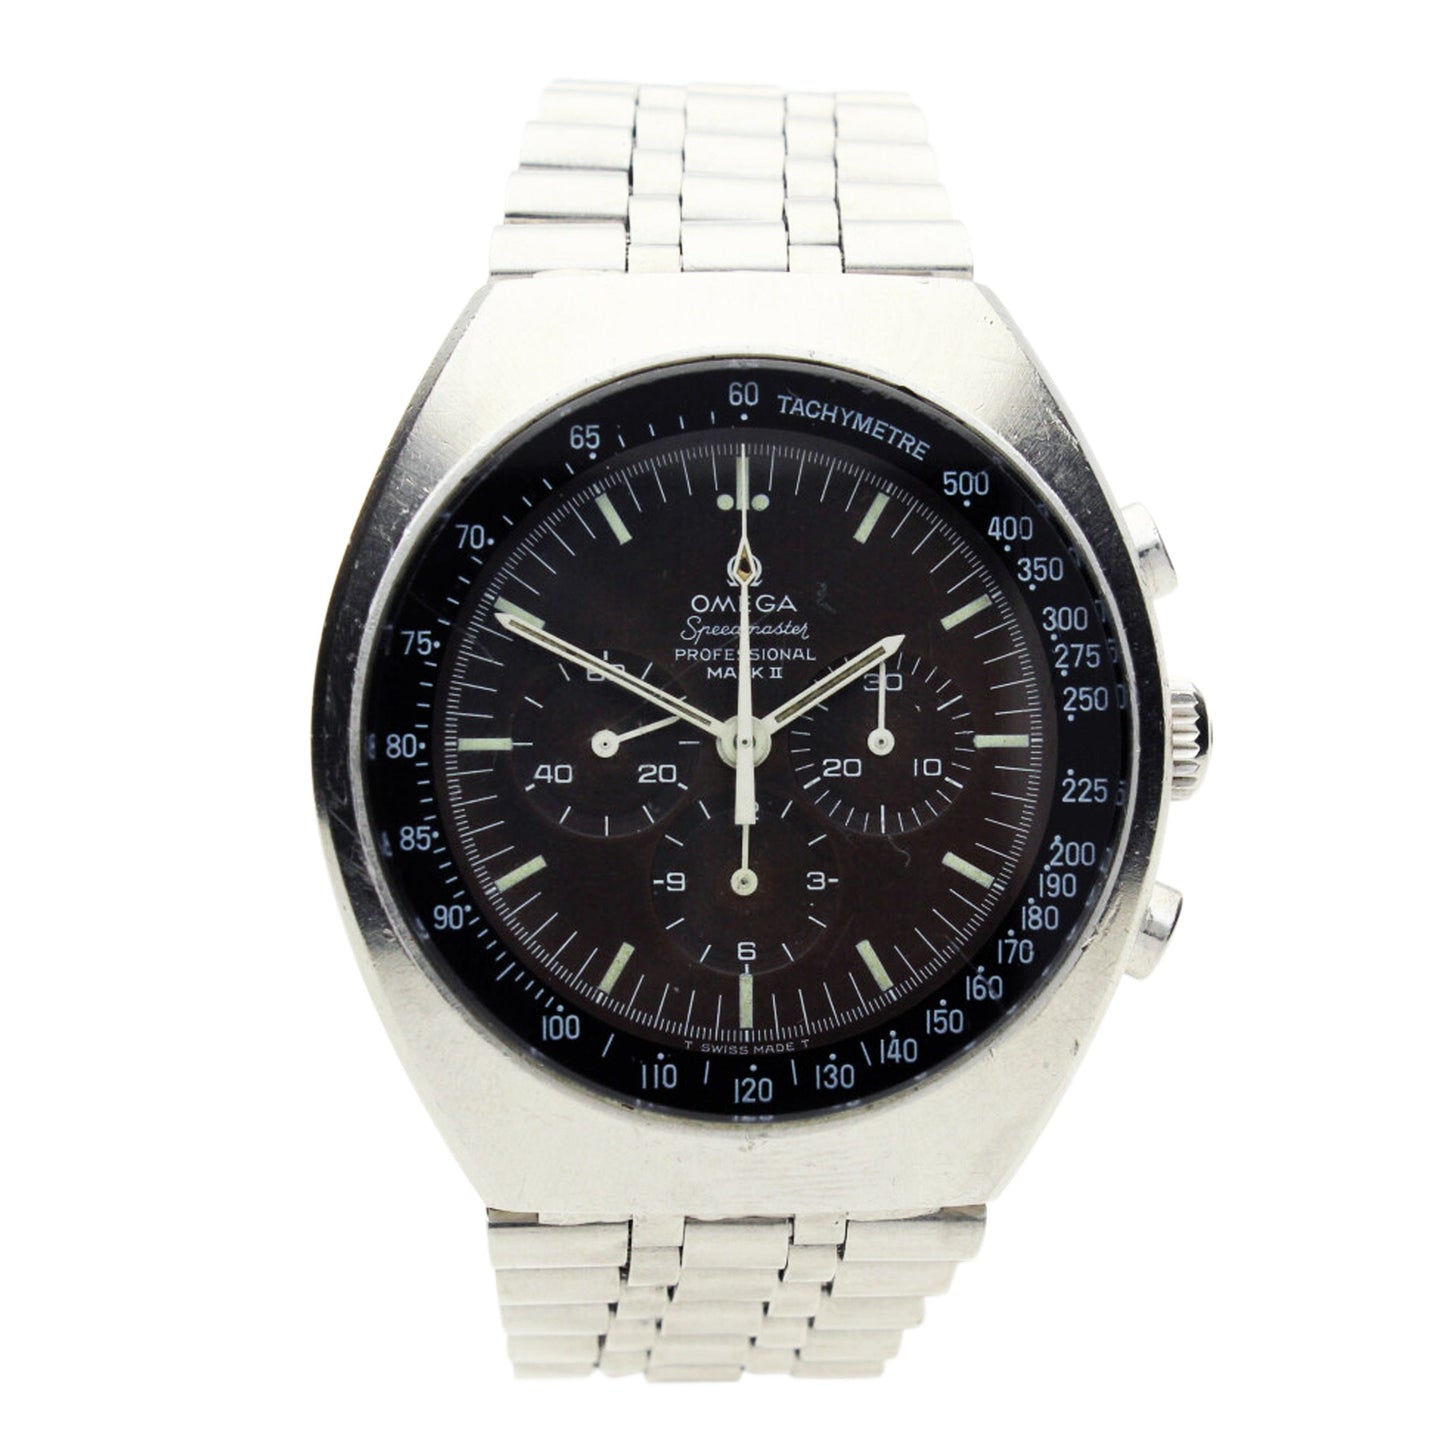 Stainless steel Speedmaster Mark II chronograph bracelet watch. Made 1970